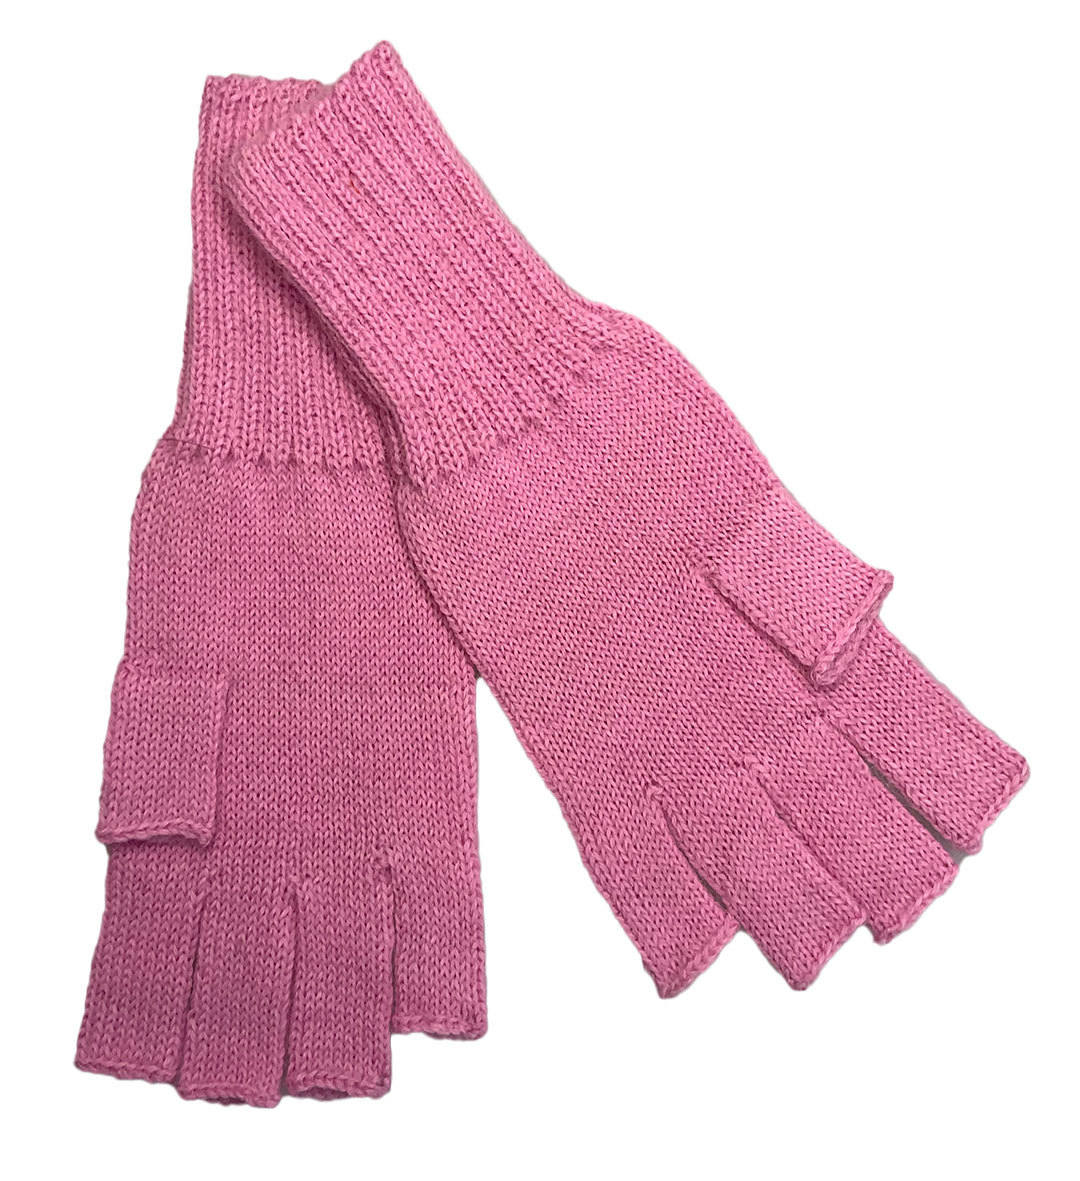 Jesse Fingerless Gloves - Pink - 1